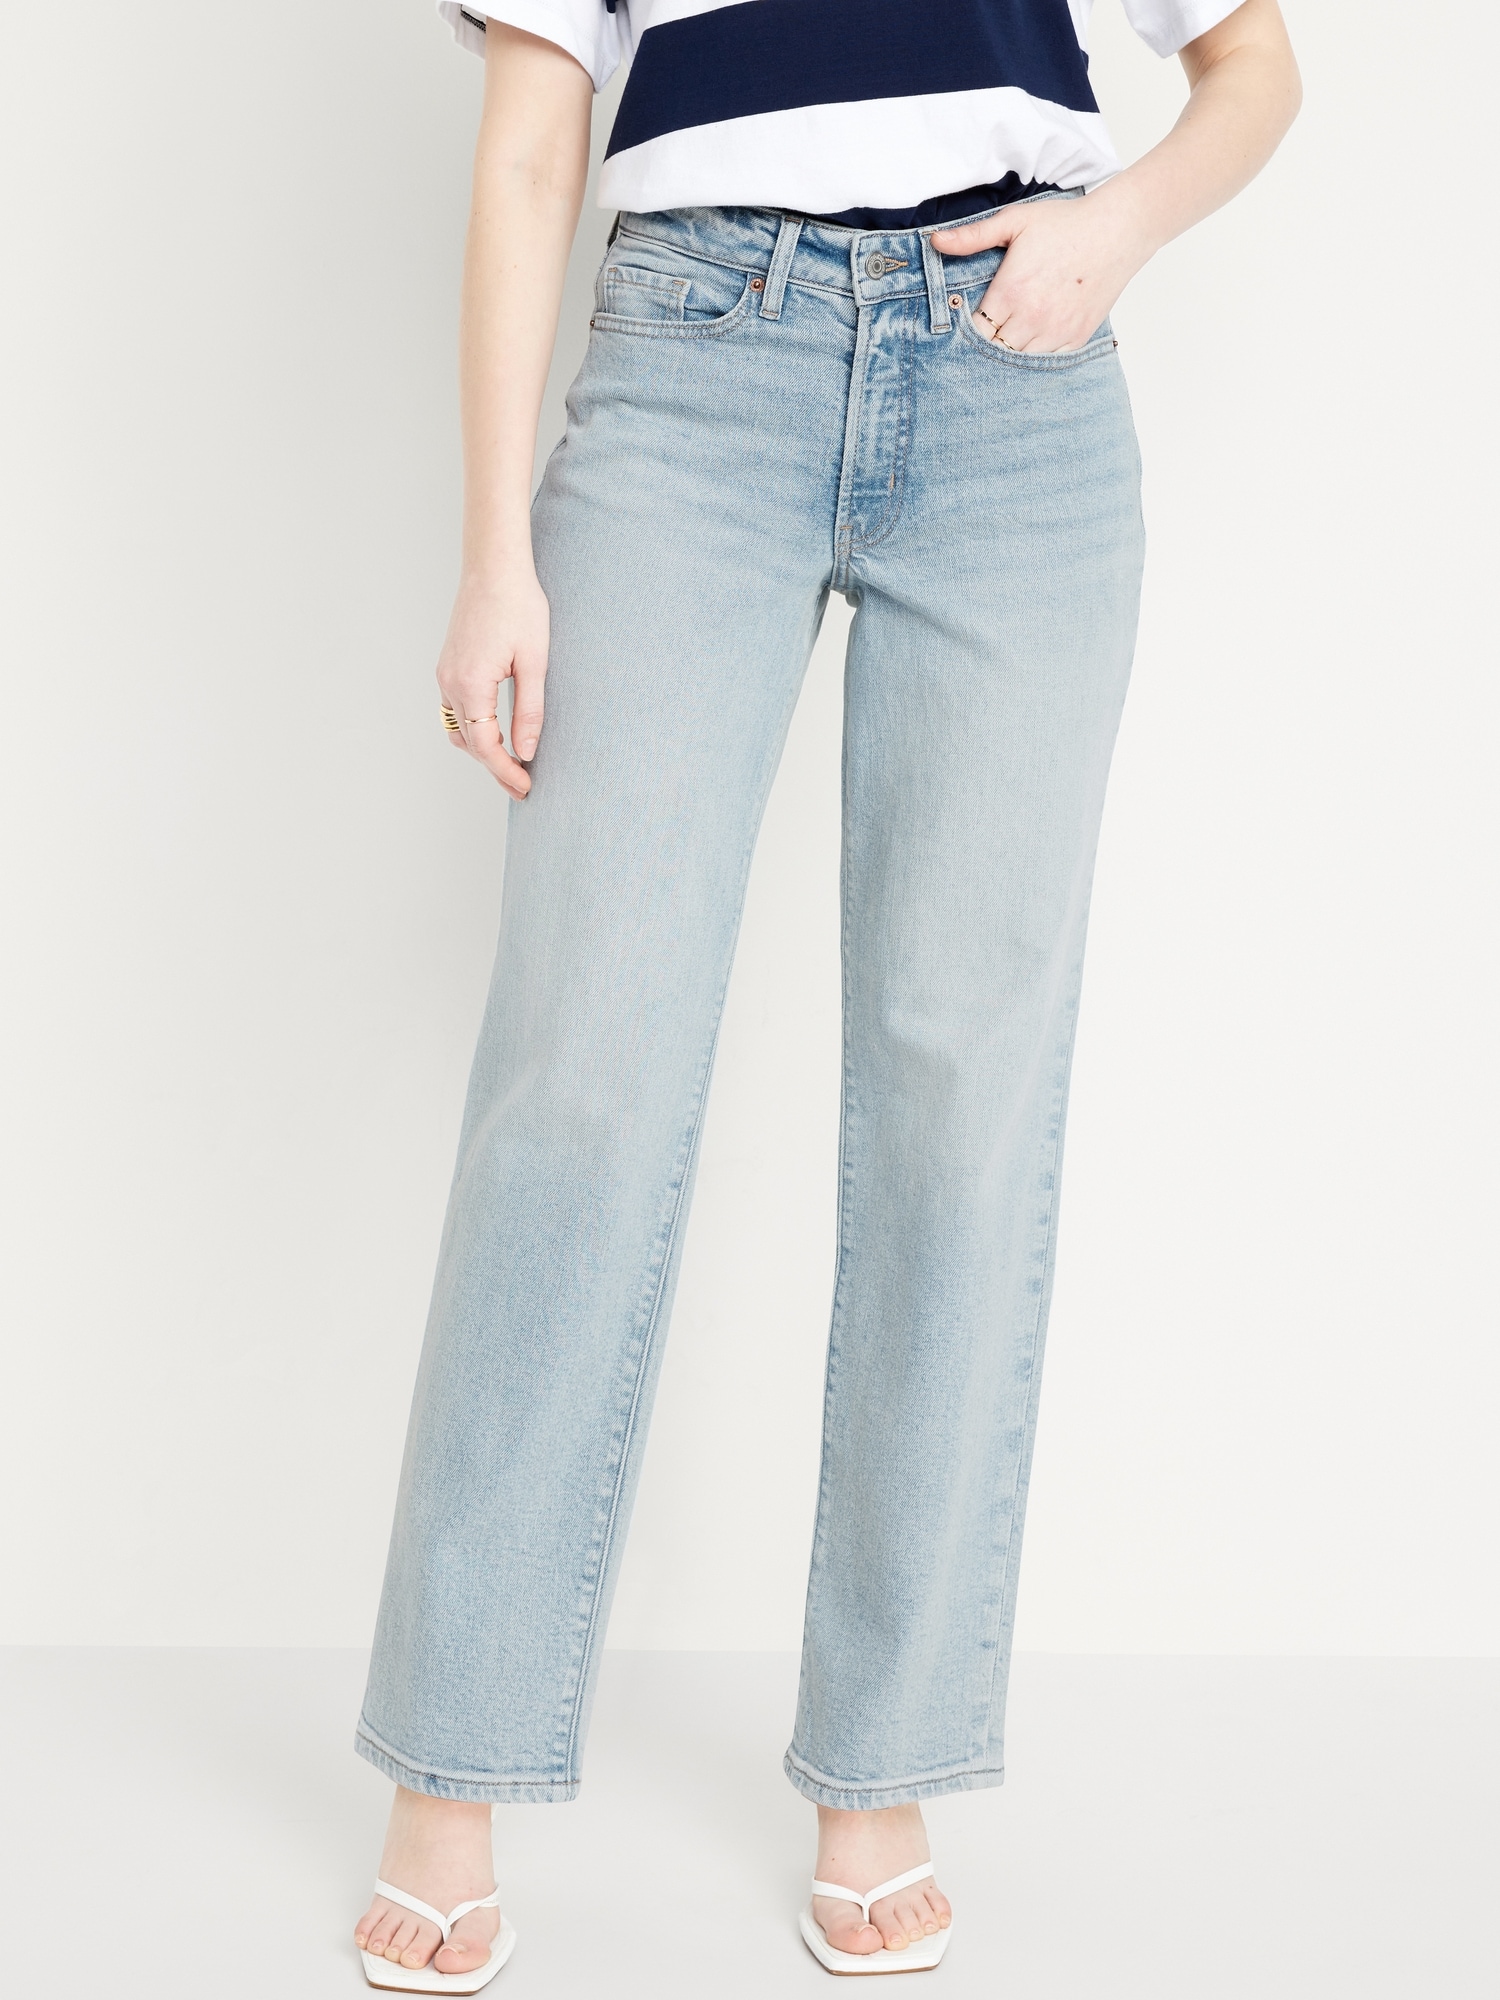 Curvy High-Waisted OG Loose Jeans Hot Deal